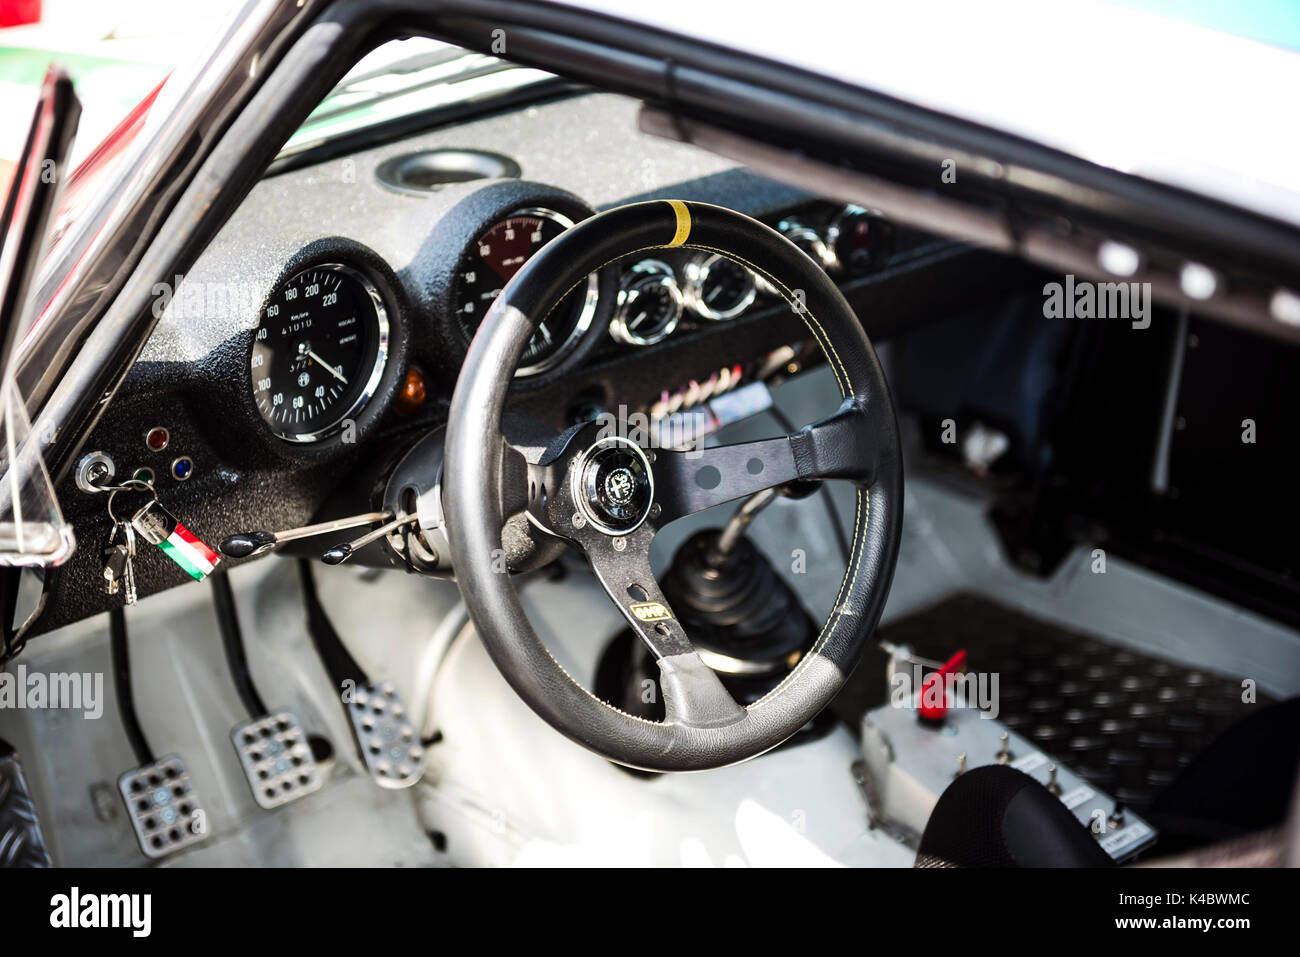 Alfa Romeo Gta Classic Race Car Interior Stock Photo